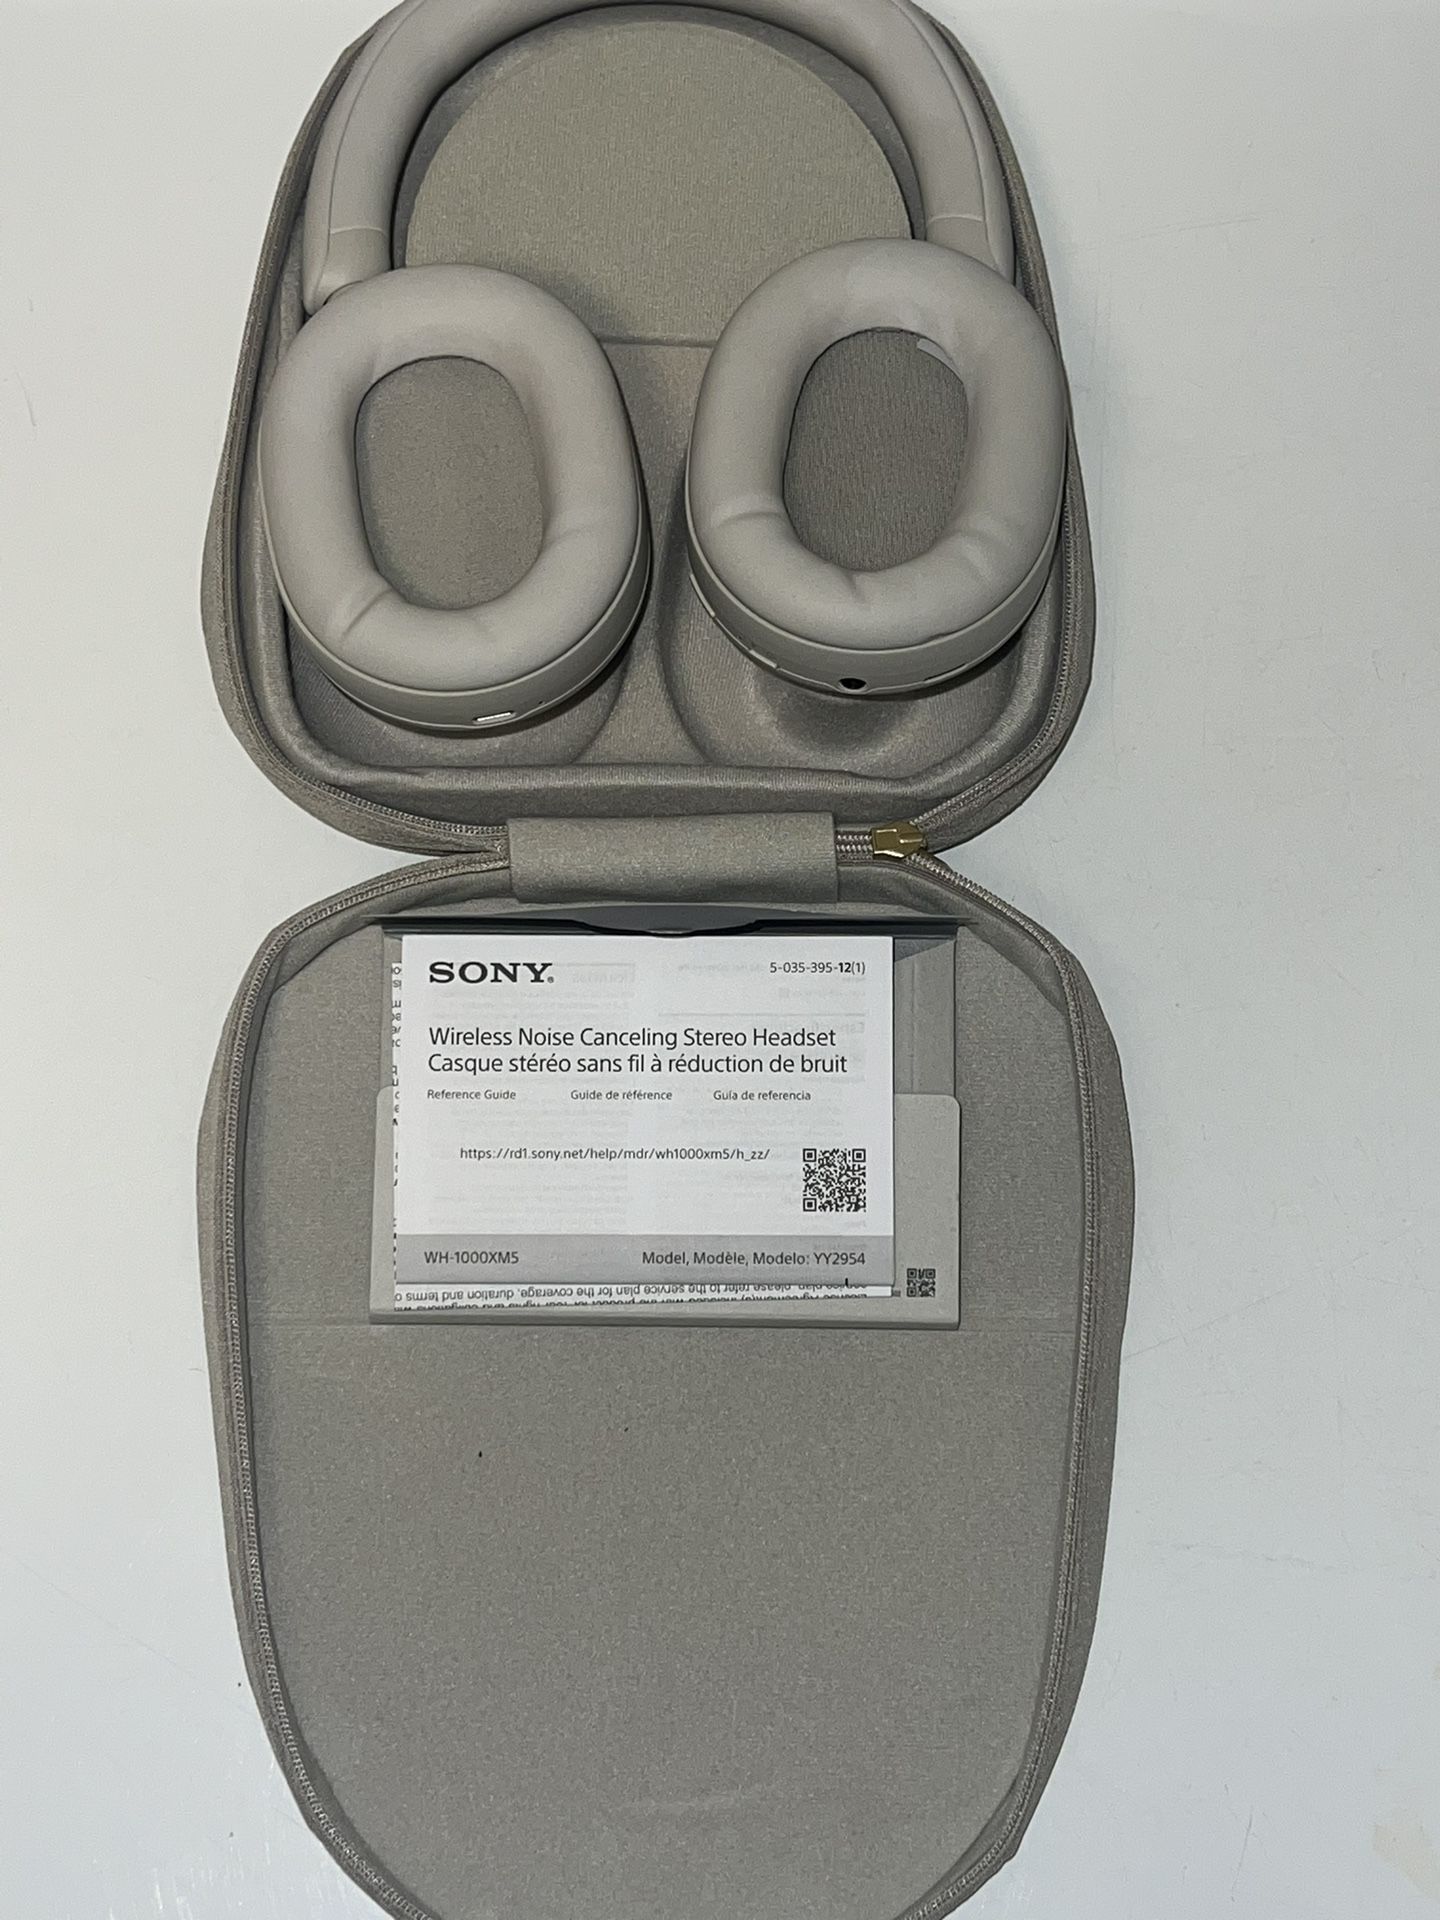 Sony WH-1000XM5 Wireless Noise-Canceling Headphones $290 OBO